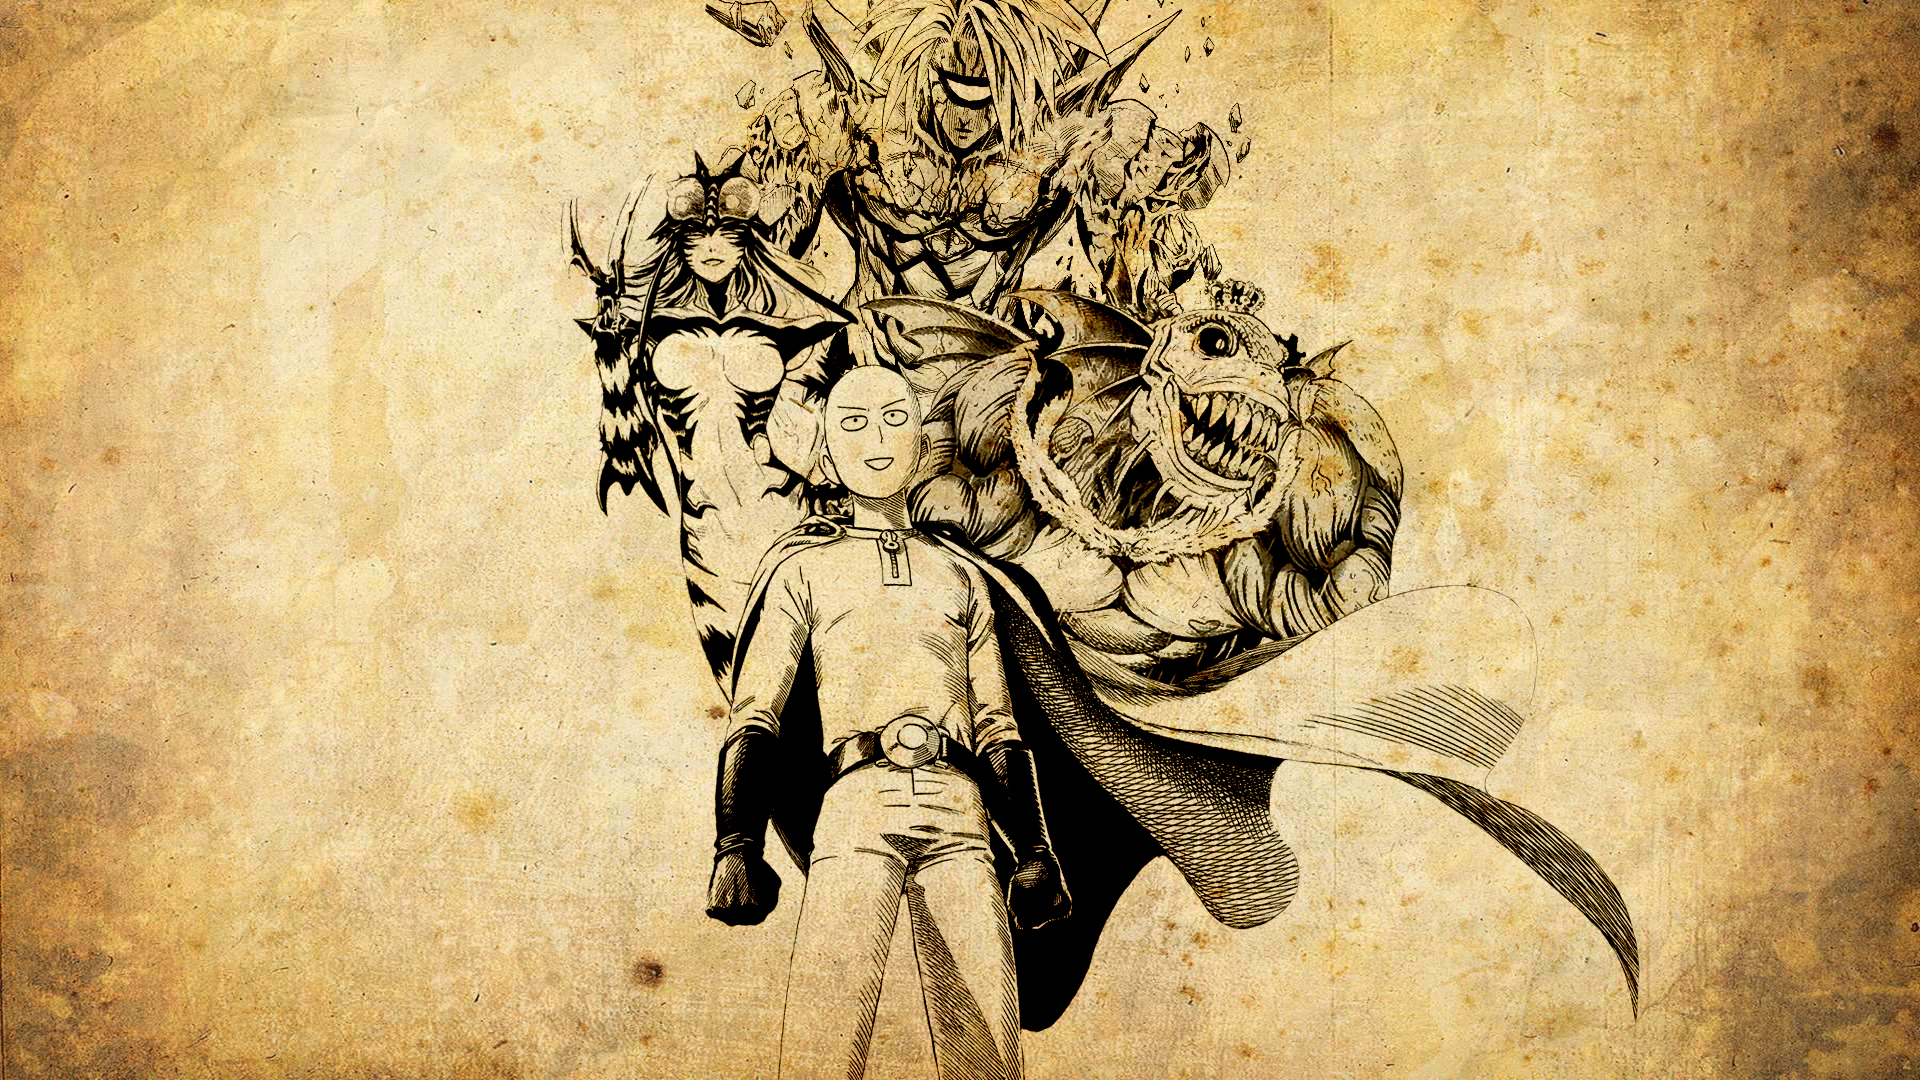 Onepunch Man Wallpaper: Saitama And Friends